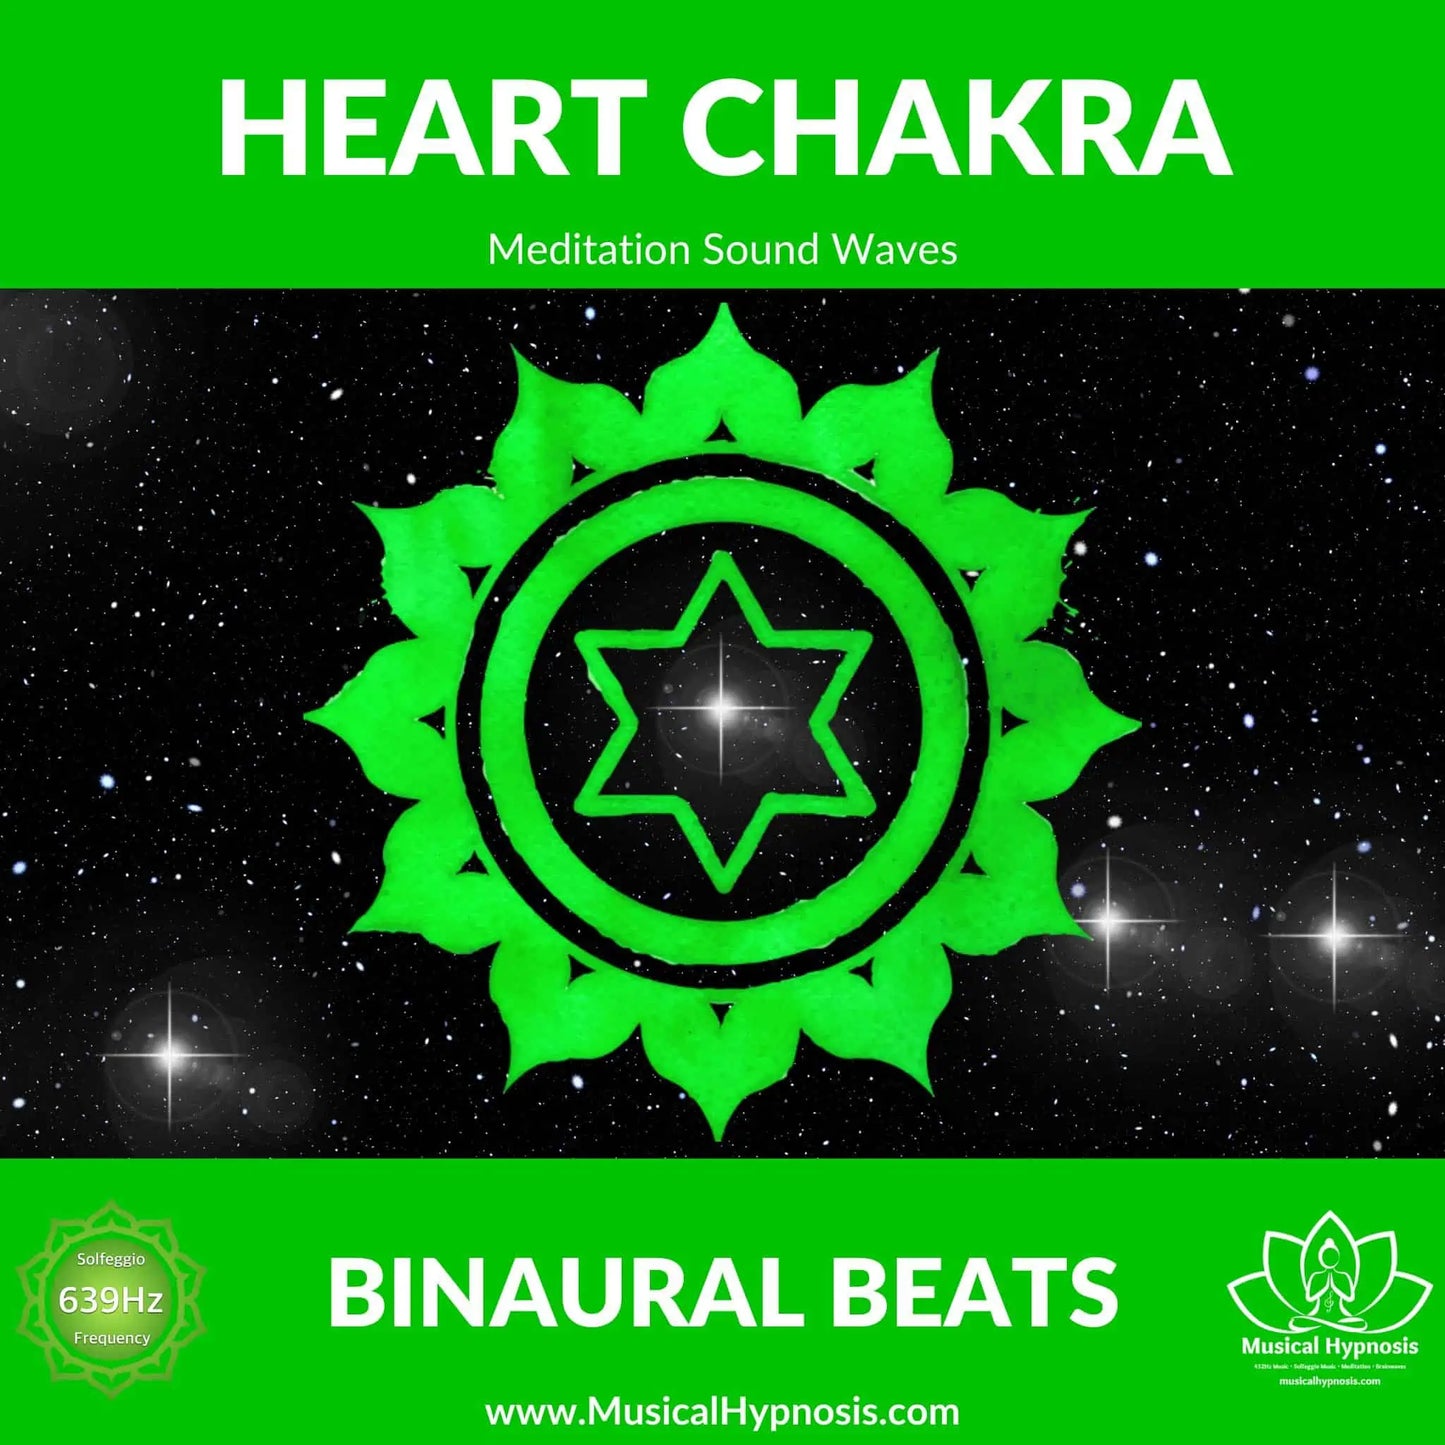 Heart Chakra Binaural Beats | 30 minutes